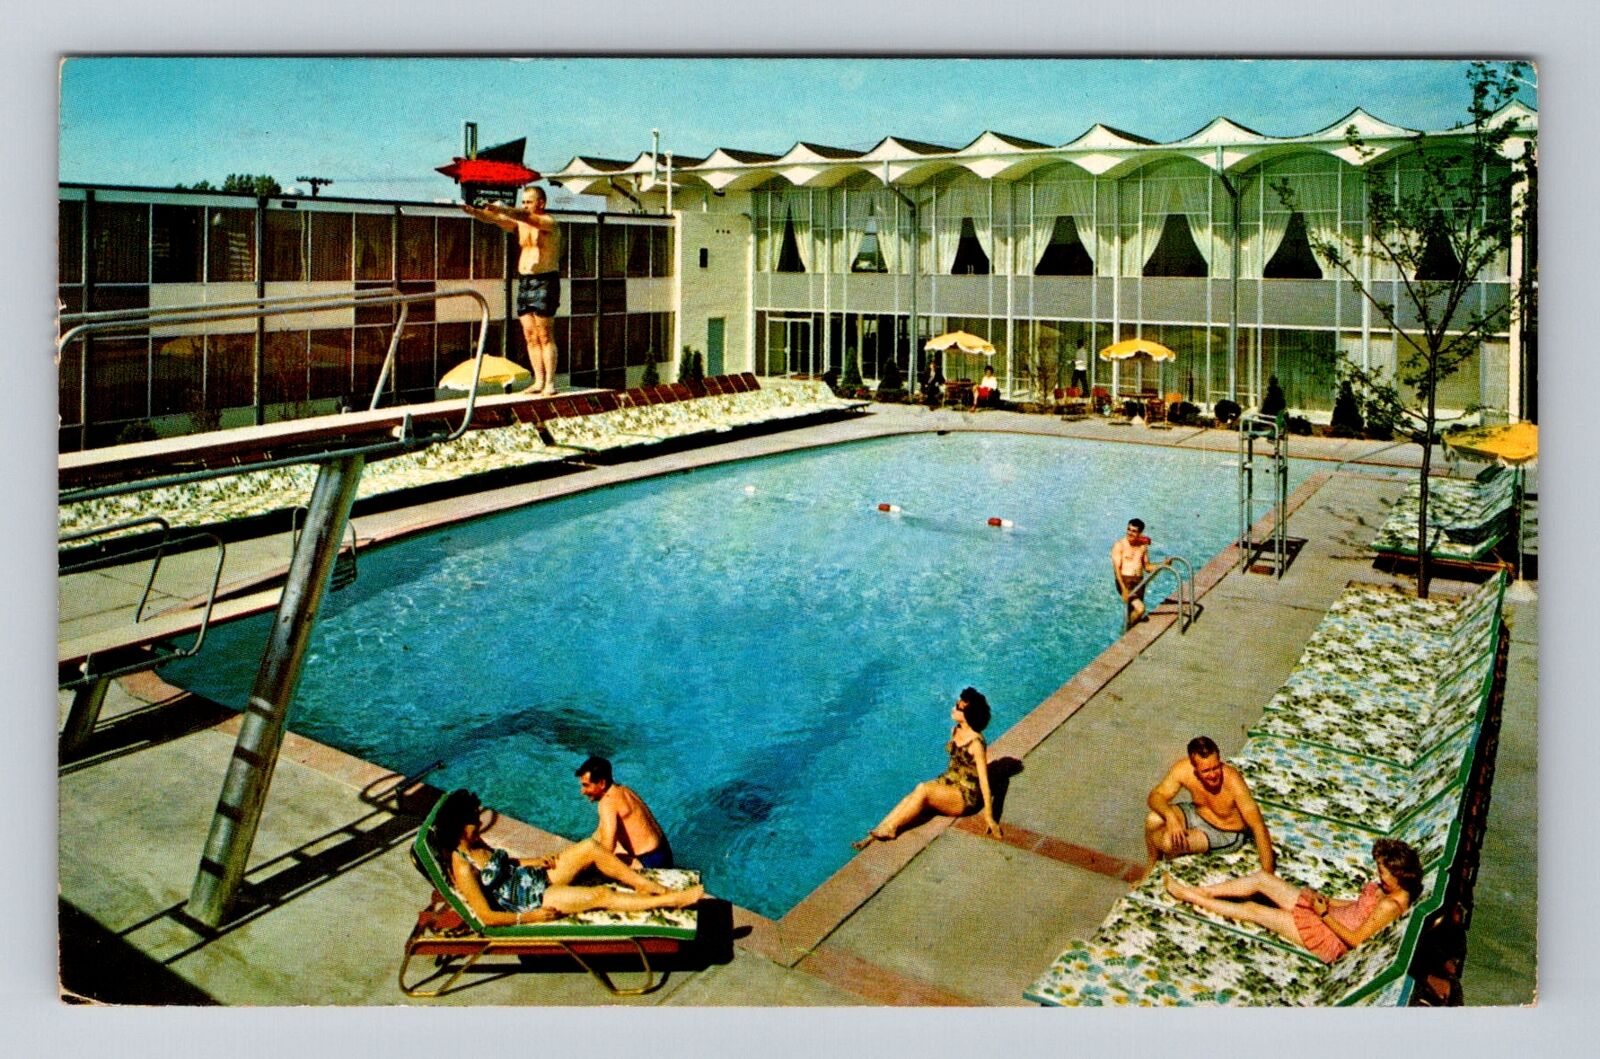 Gary IN-Indiana, Sheraton Inn Advertising, Vintage Souvenir Postcard